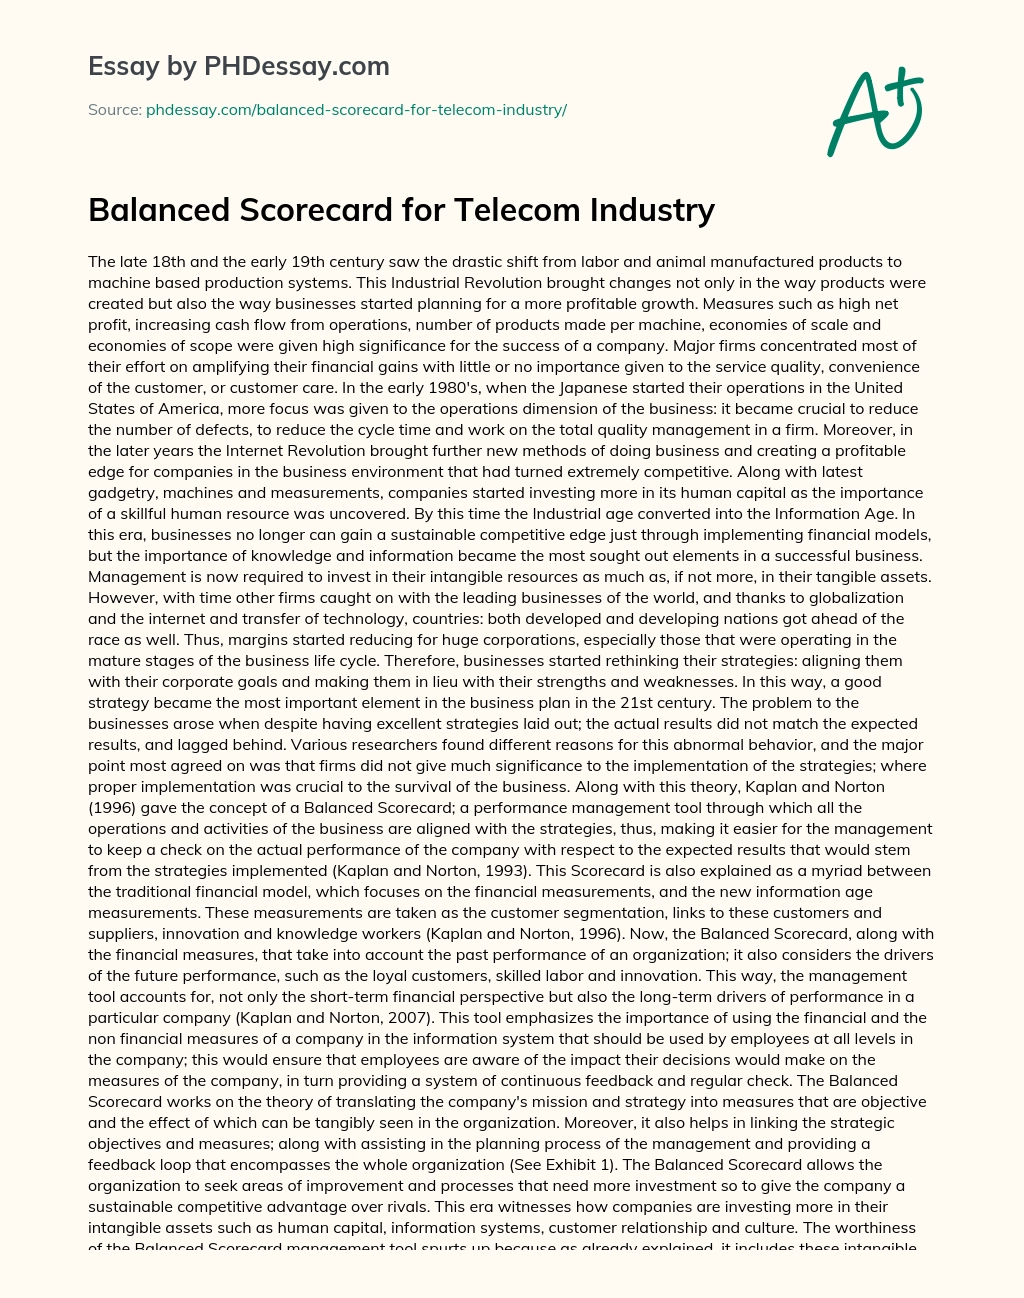 Balanced Scorecard for Telecom Industry essay